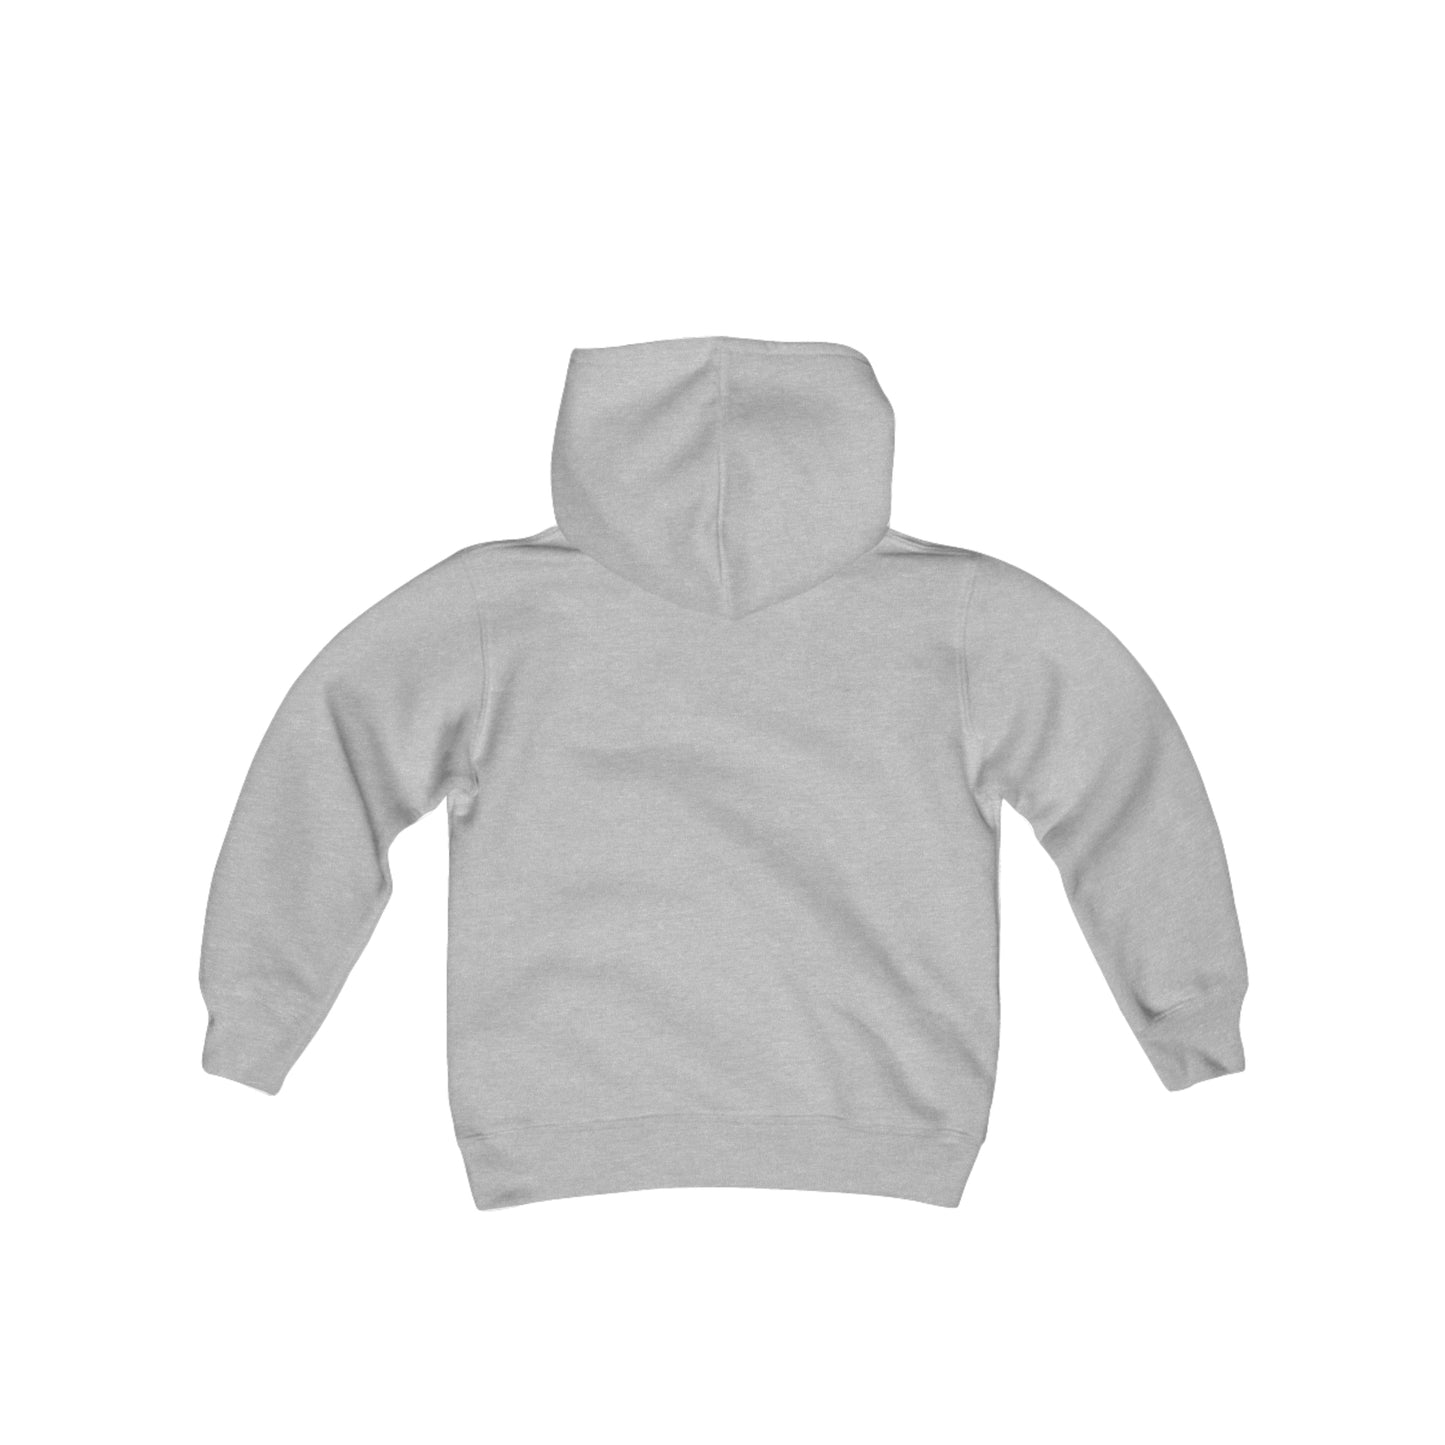 Created With A Purpose, Youth Teen Hooded Sweatshirt Hoodie